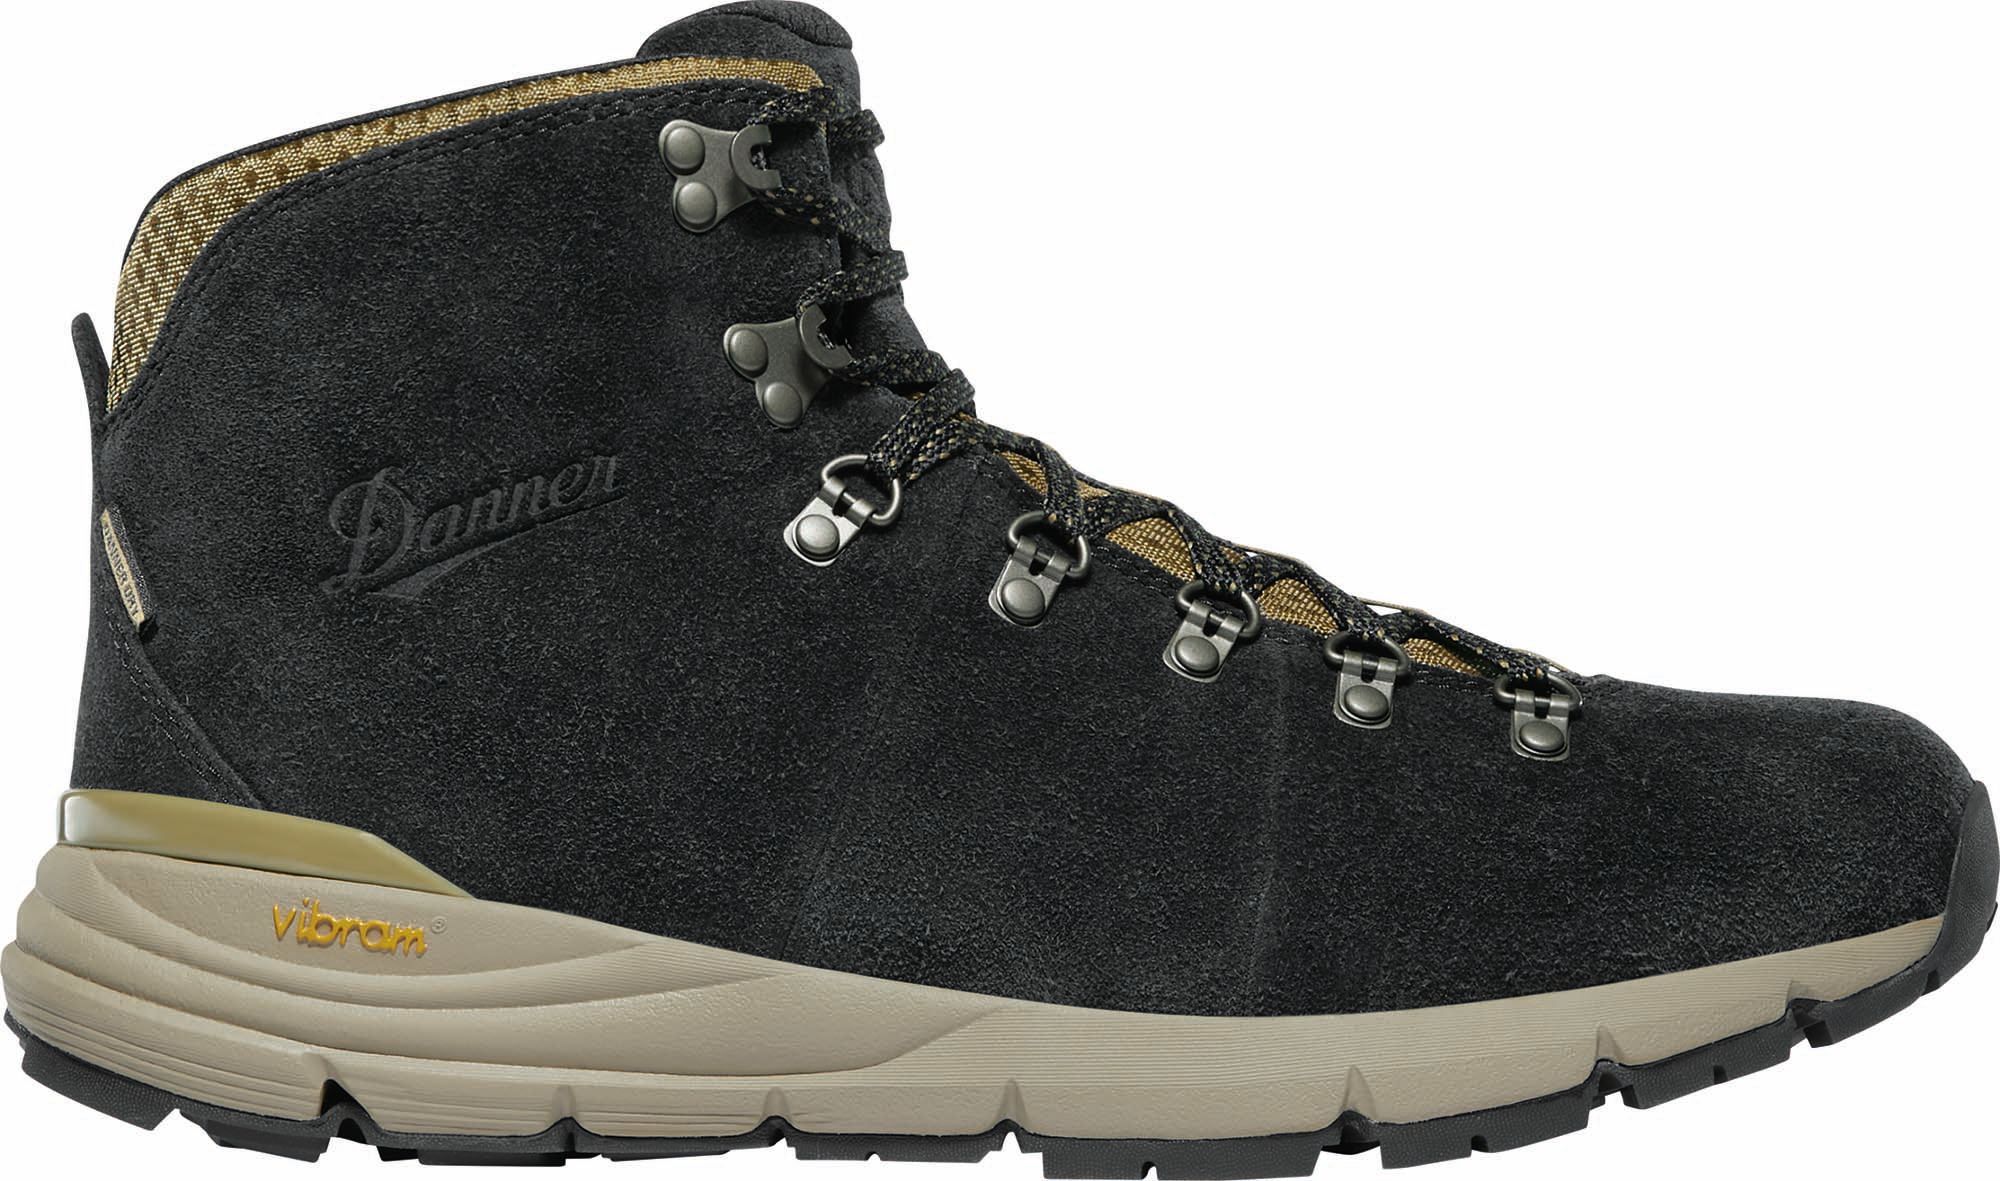 Photos - Trekking Shoes Danner Men's Mountain 600 4.5" Waterproof Hiking Boots, Size 12, Black/Kha 